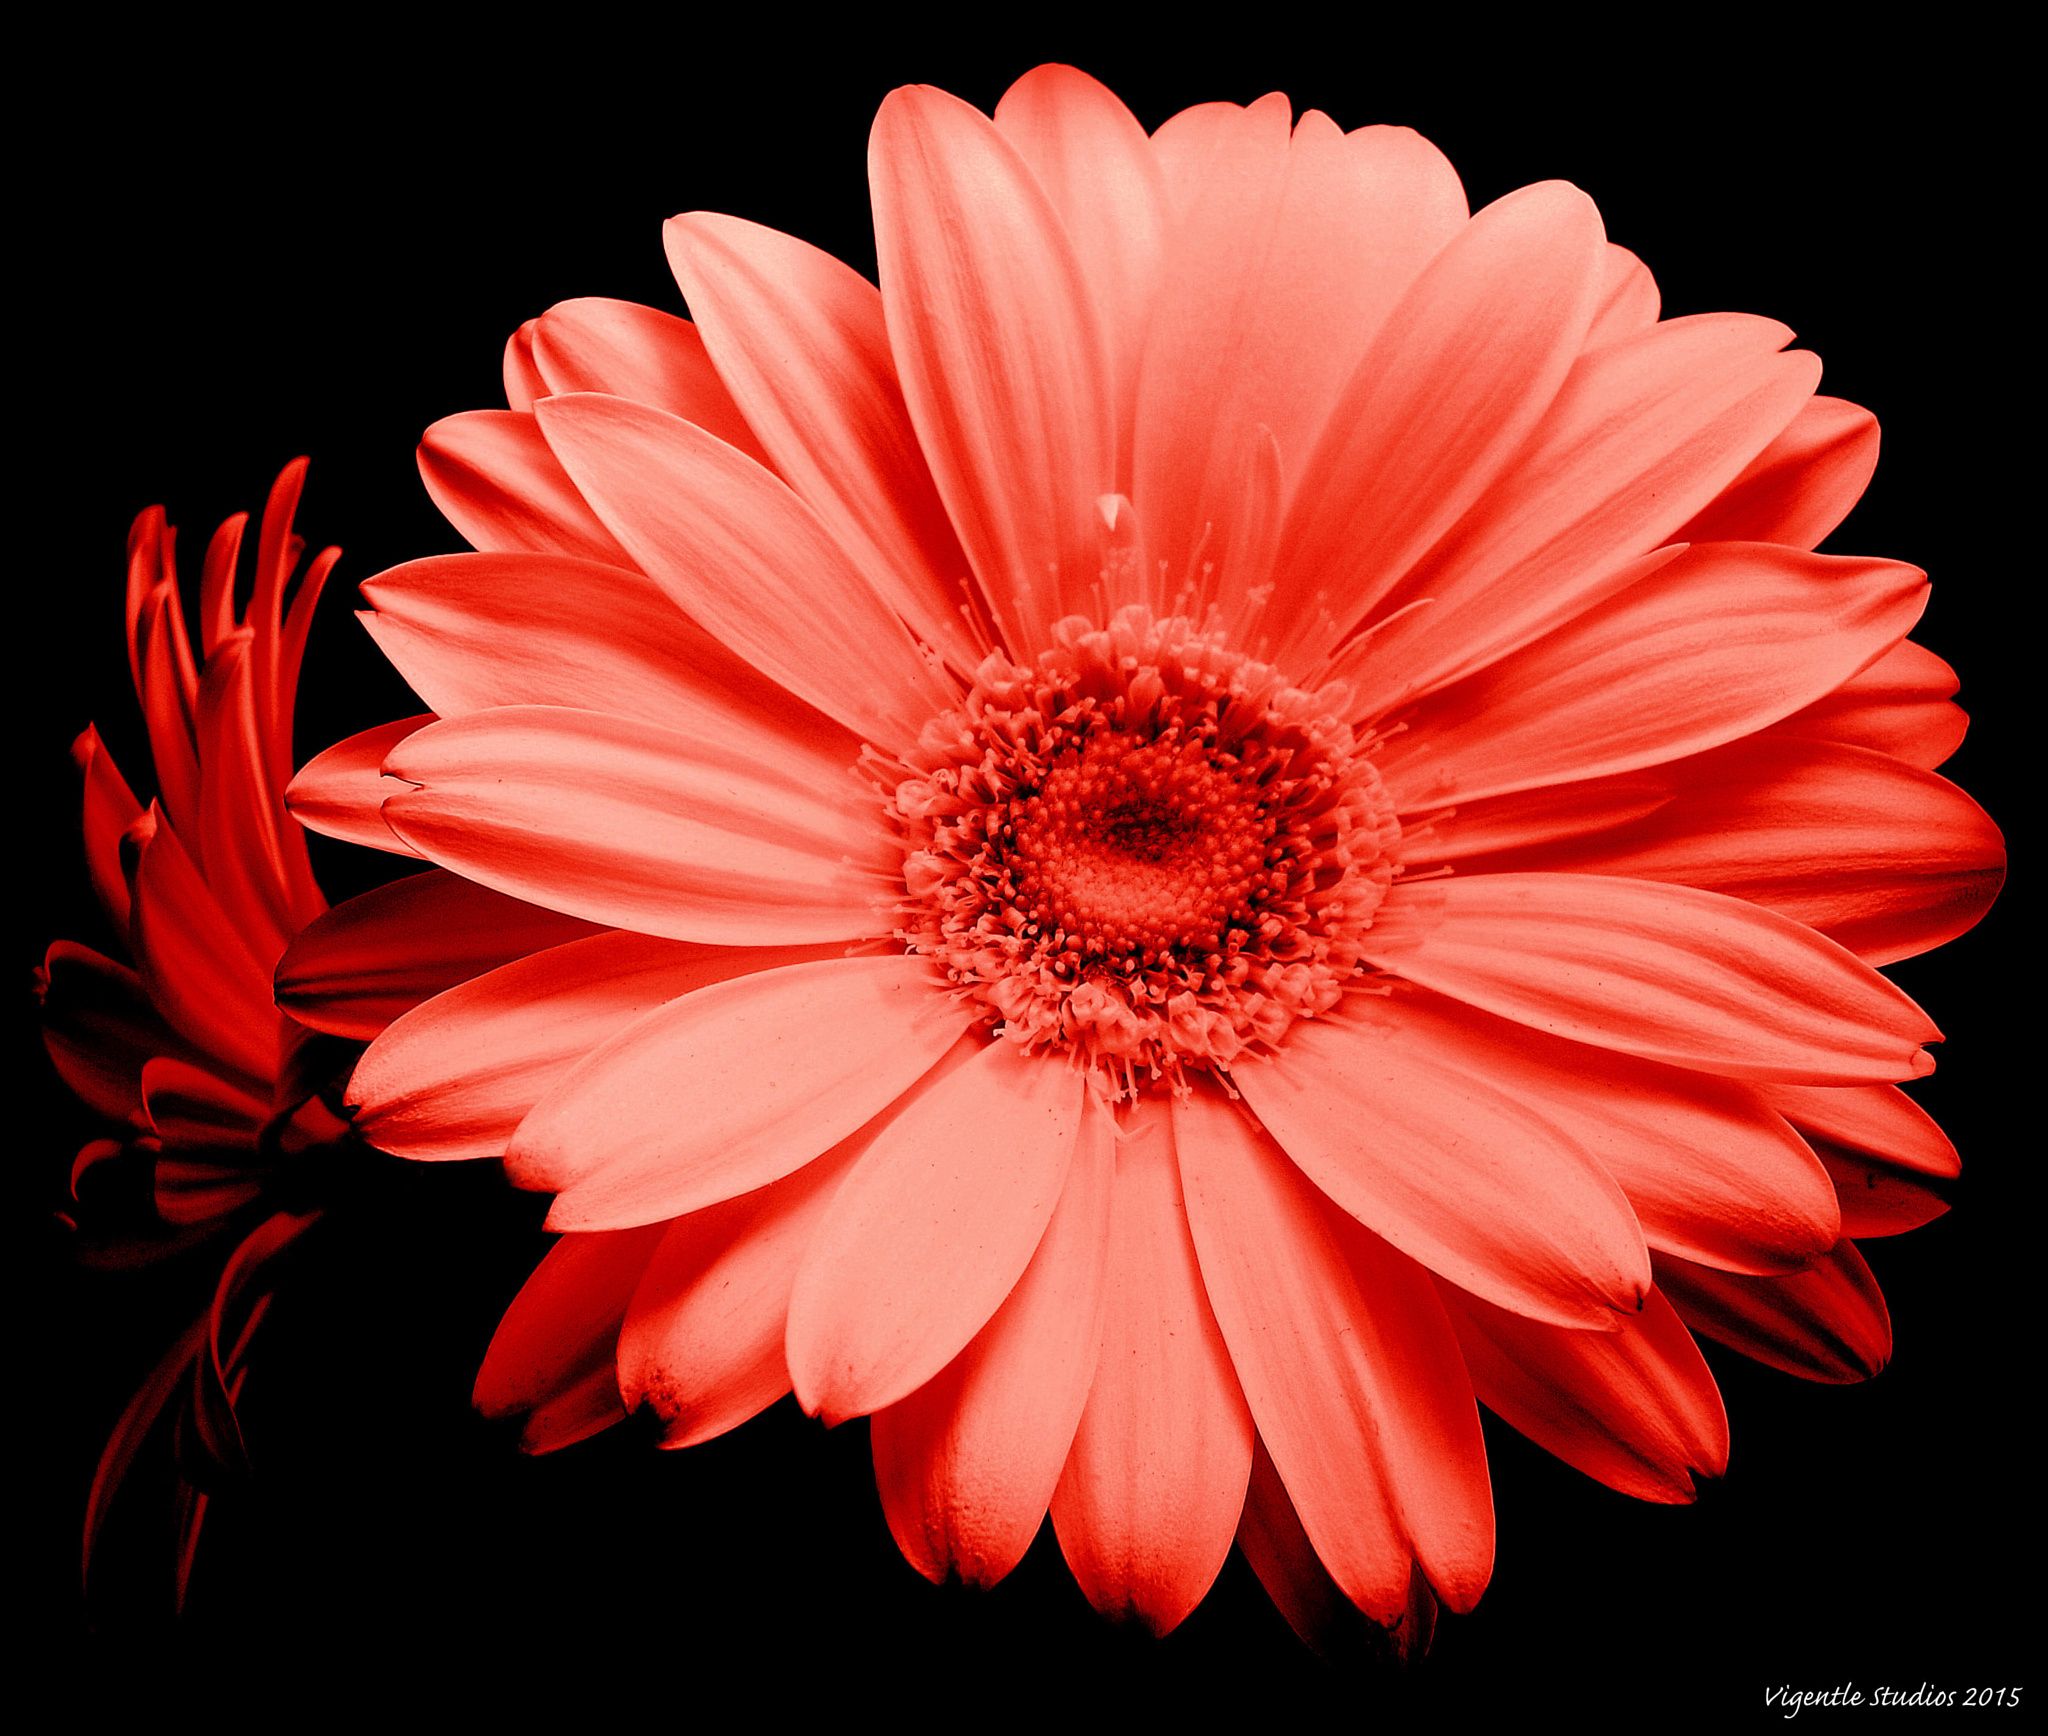 Red gerbera flower heads by Vigentle on 500px | flowers | Pinterest ...